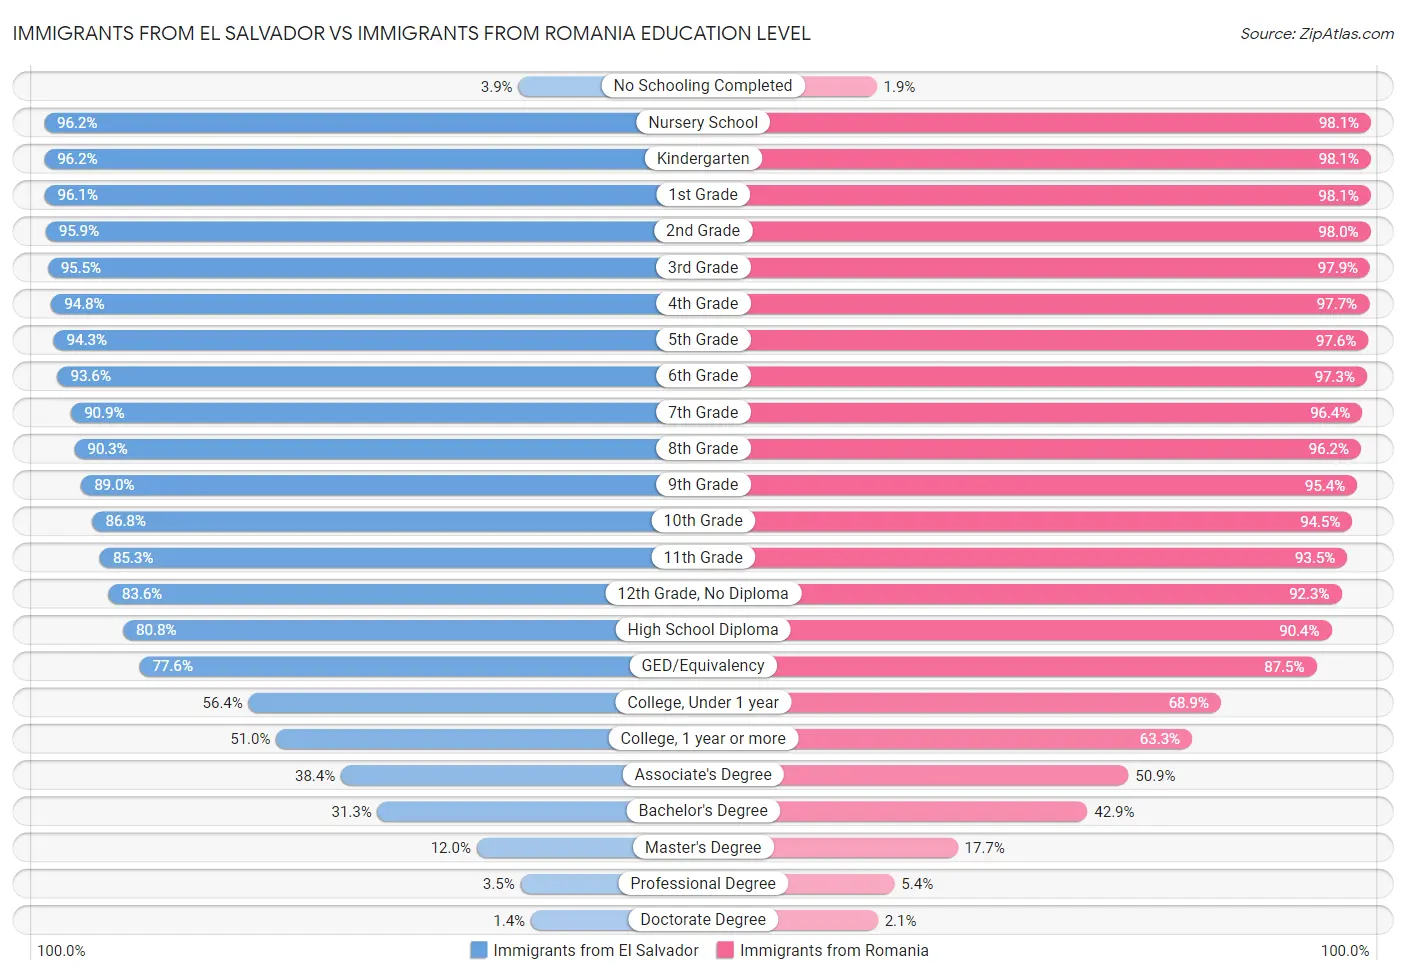 Immigrants from El Salvador vs Immigrants from Romania Education Level